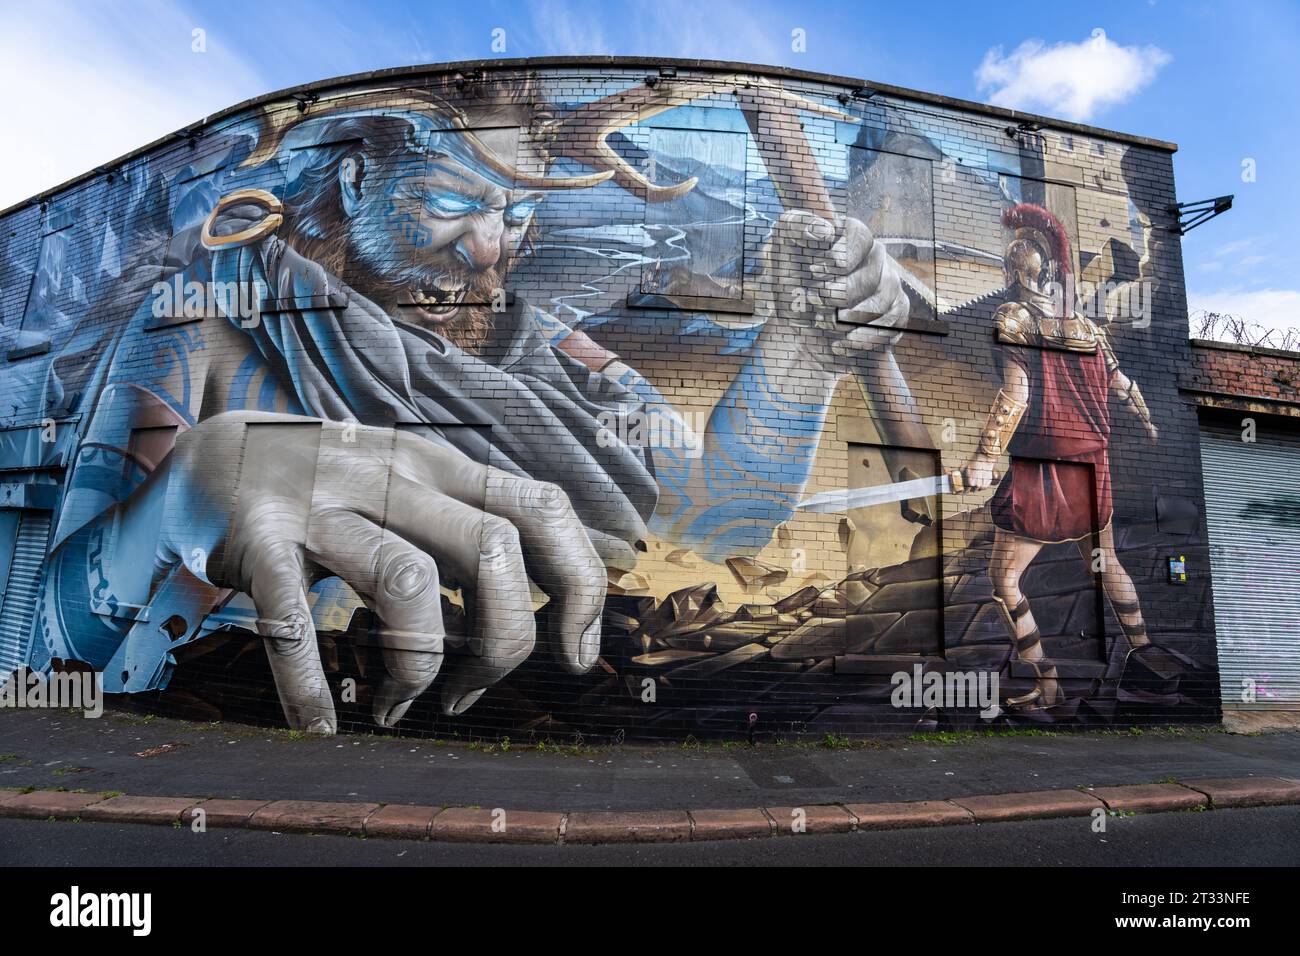 urban wall art depicting a Roman legionary fighting a celt or pict warrior or god, Carlisle, Cumbria, UK Stock Photo